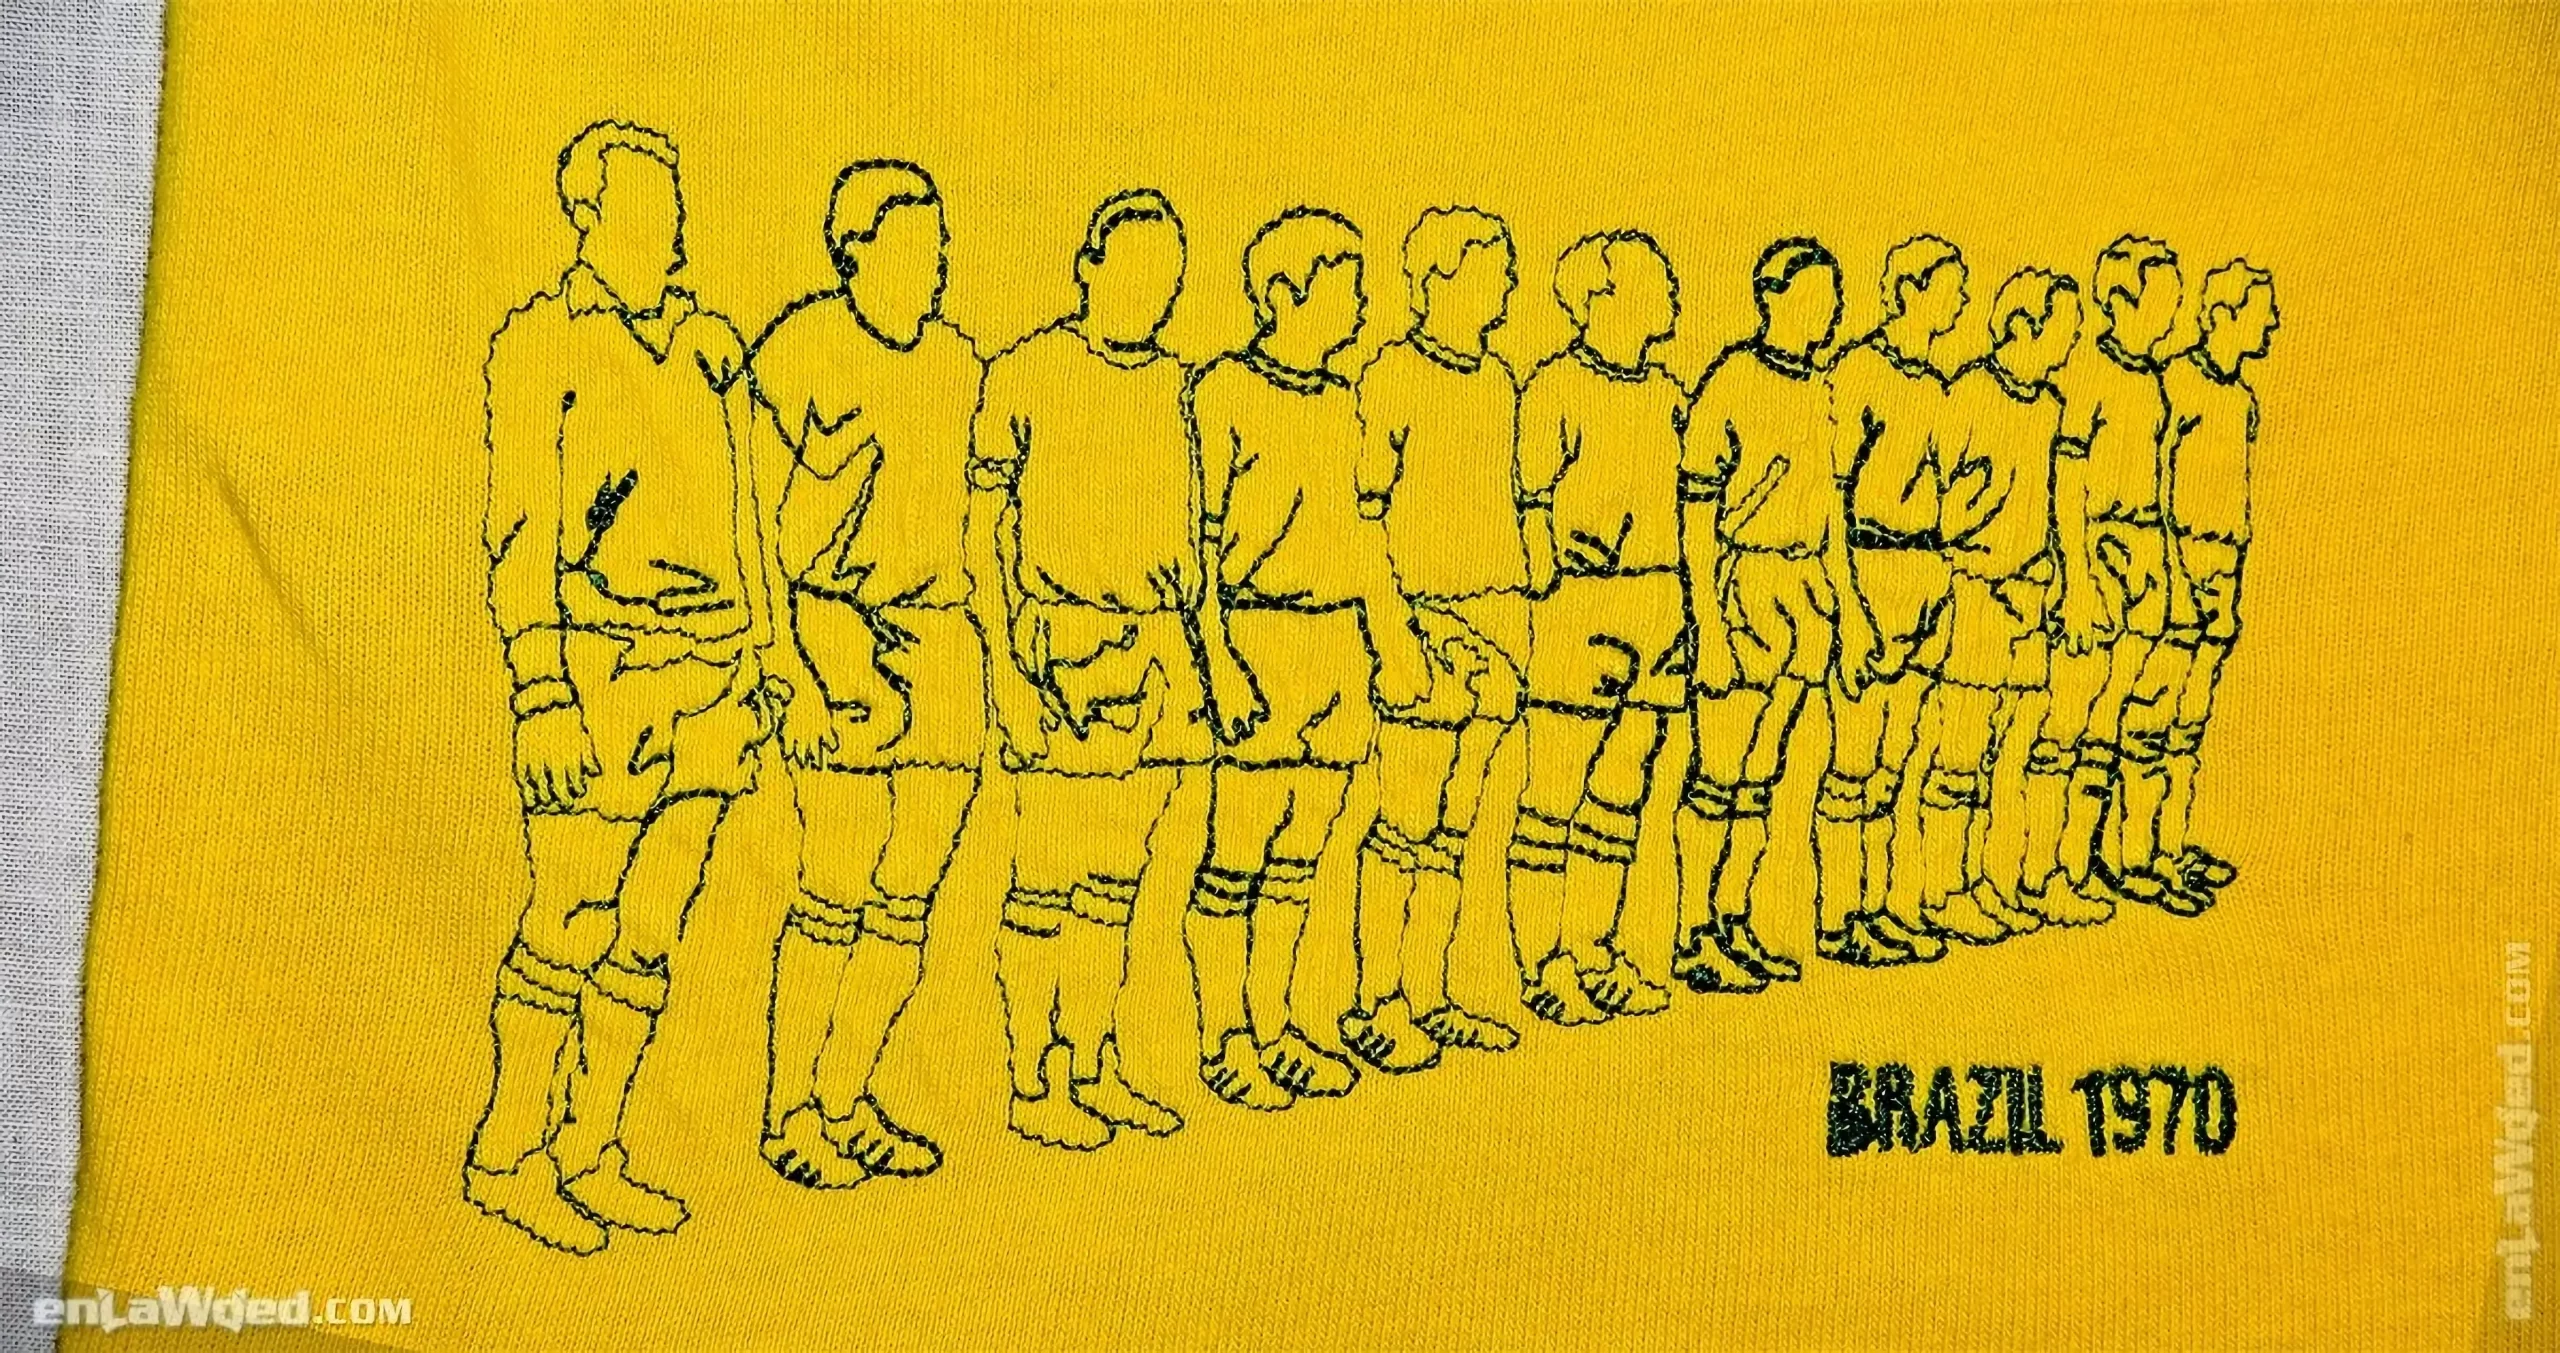 Men’s 2006 Brasil ’70 T-Shirt by Adidas Originals: Memorable (EnLawded.com file #lmchk90225ip2y122932kg9st)